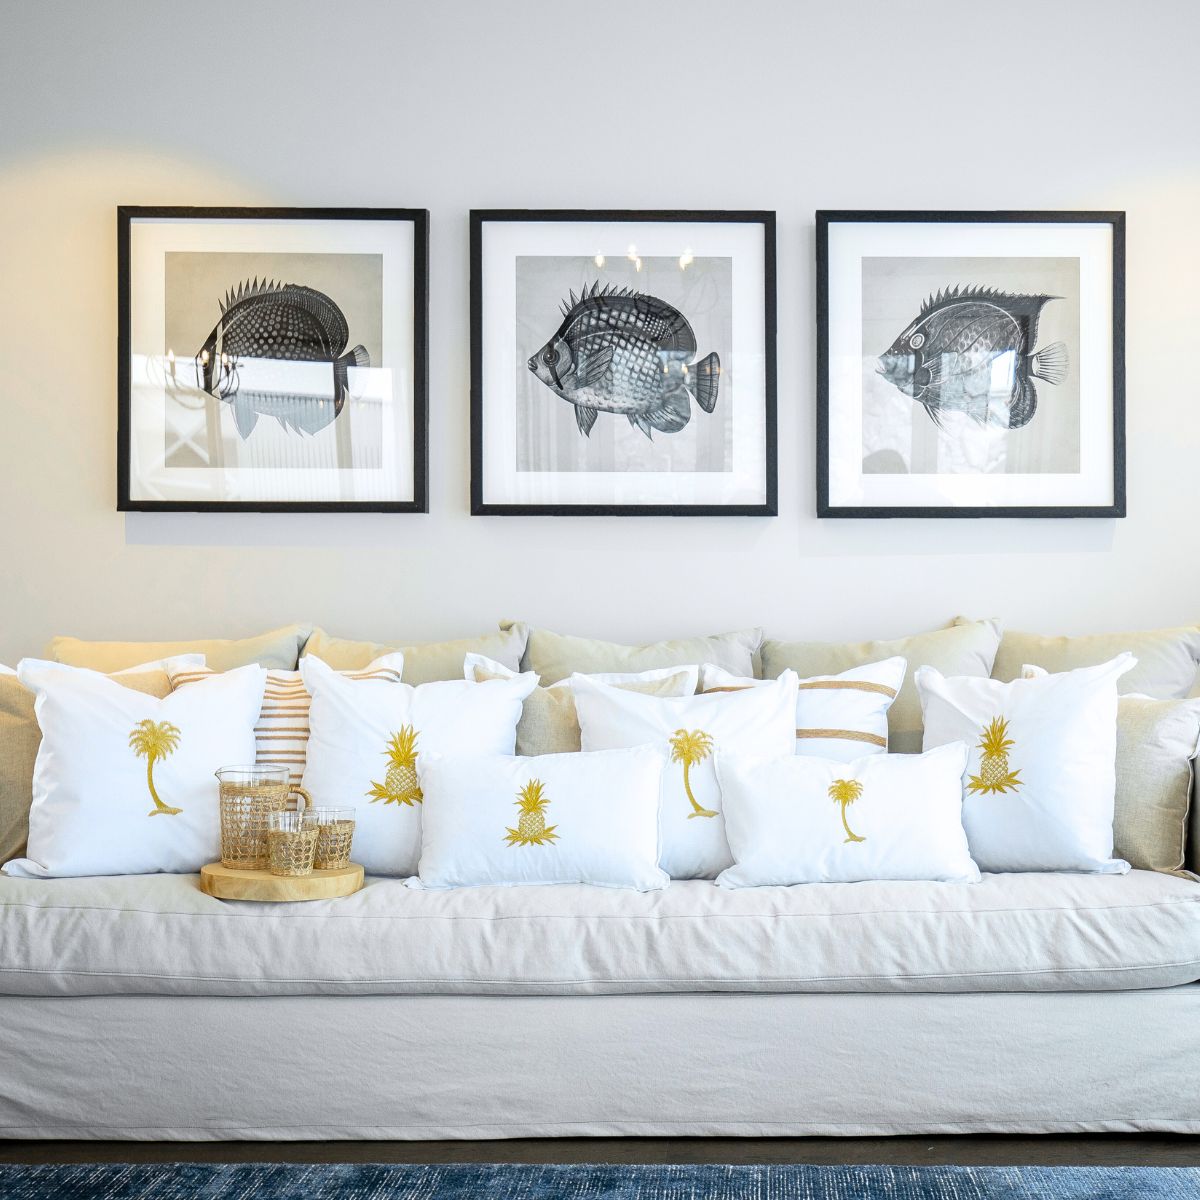 HABANA White and Gold Palm Tree Cushion Cover | Hamptons Home